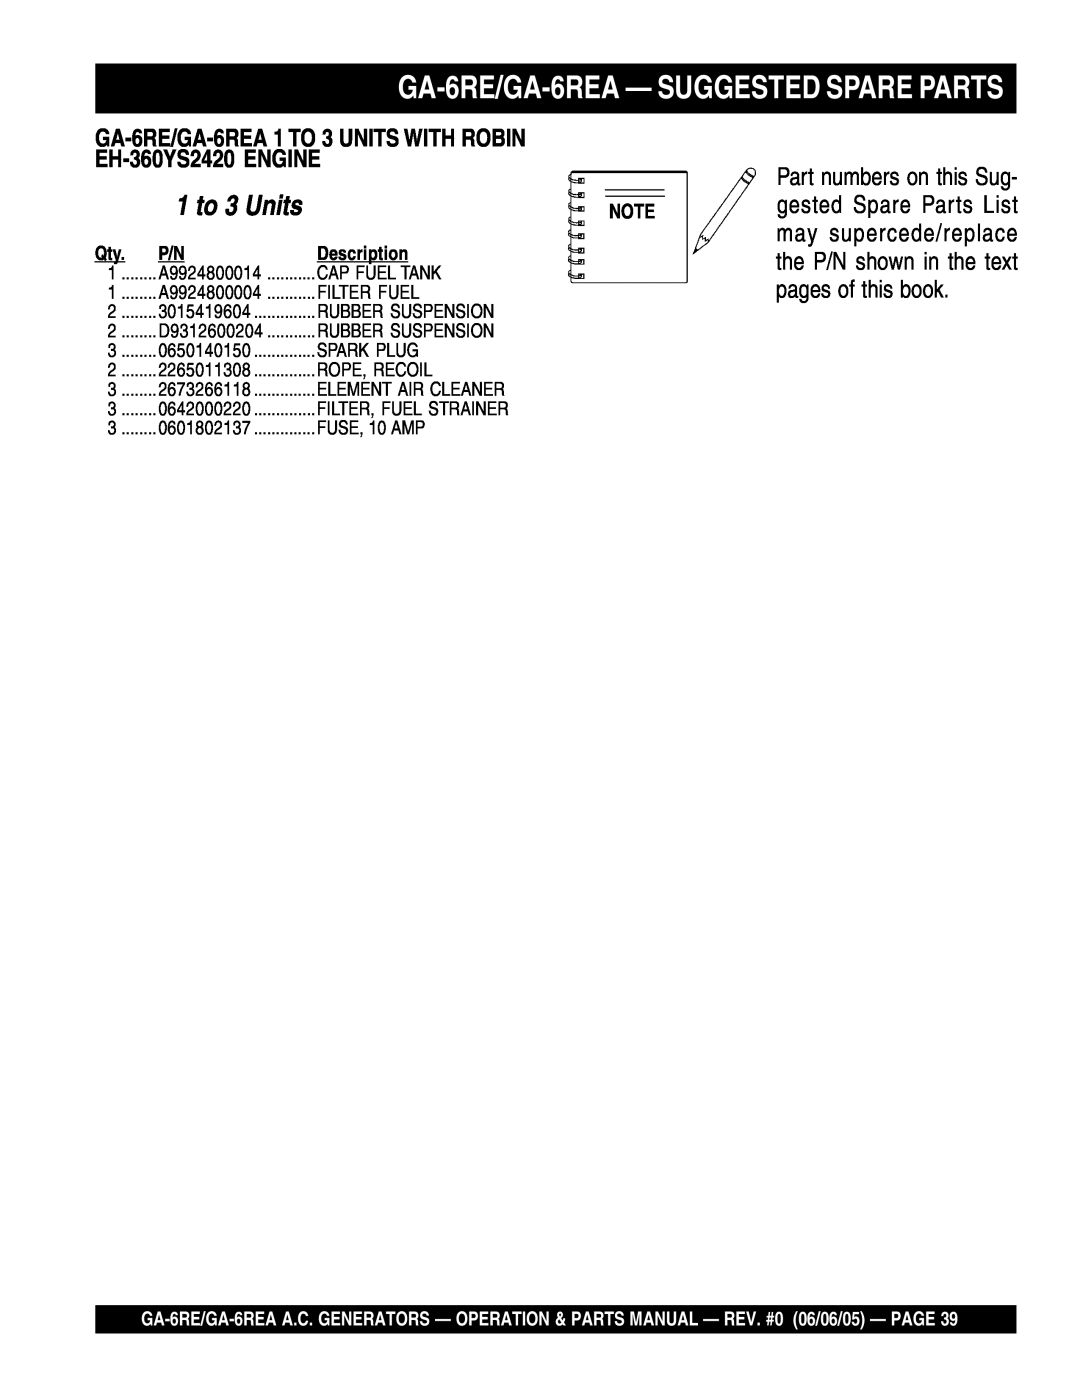 Multiquip manual GA-6RE/GA-6REA- SUGGESTED SPARE PARTS, 1 to 3 Units, Description 